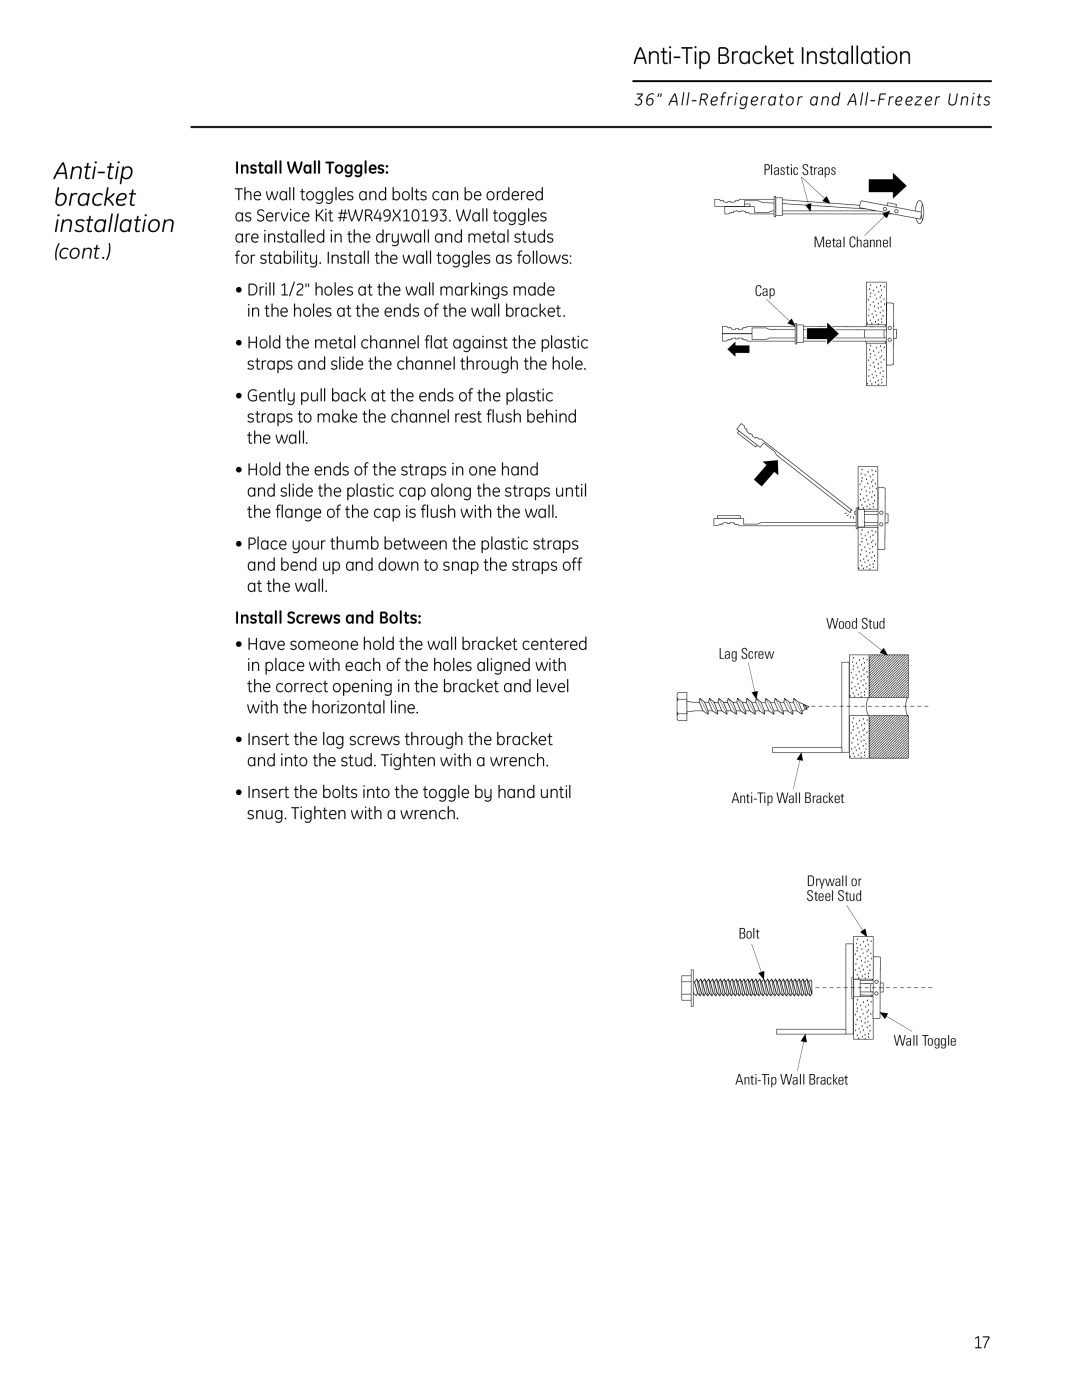 GE Monogram All-Refrigerators and All-Freezers cont, Anti-Tip Bracket Installation, Anti-tip bracket installation 